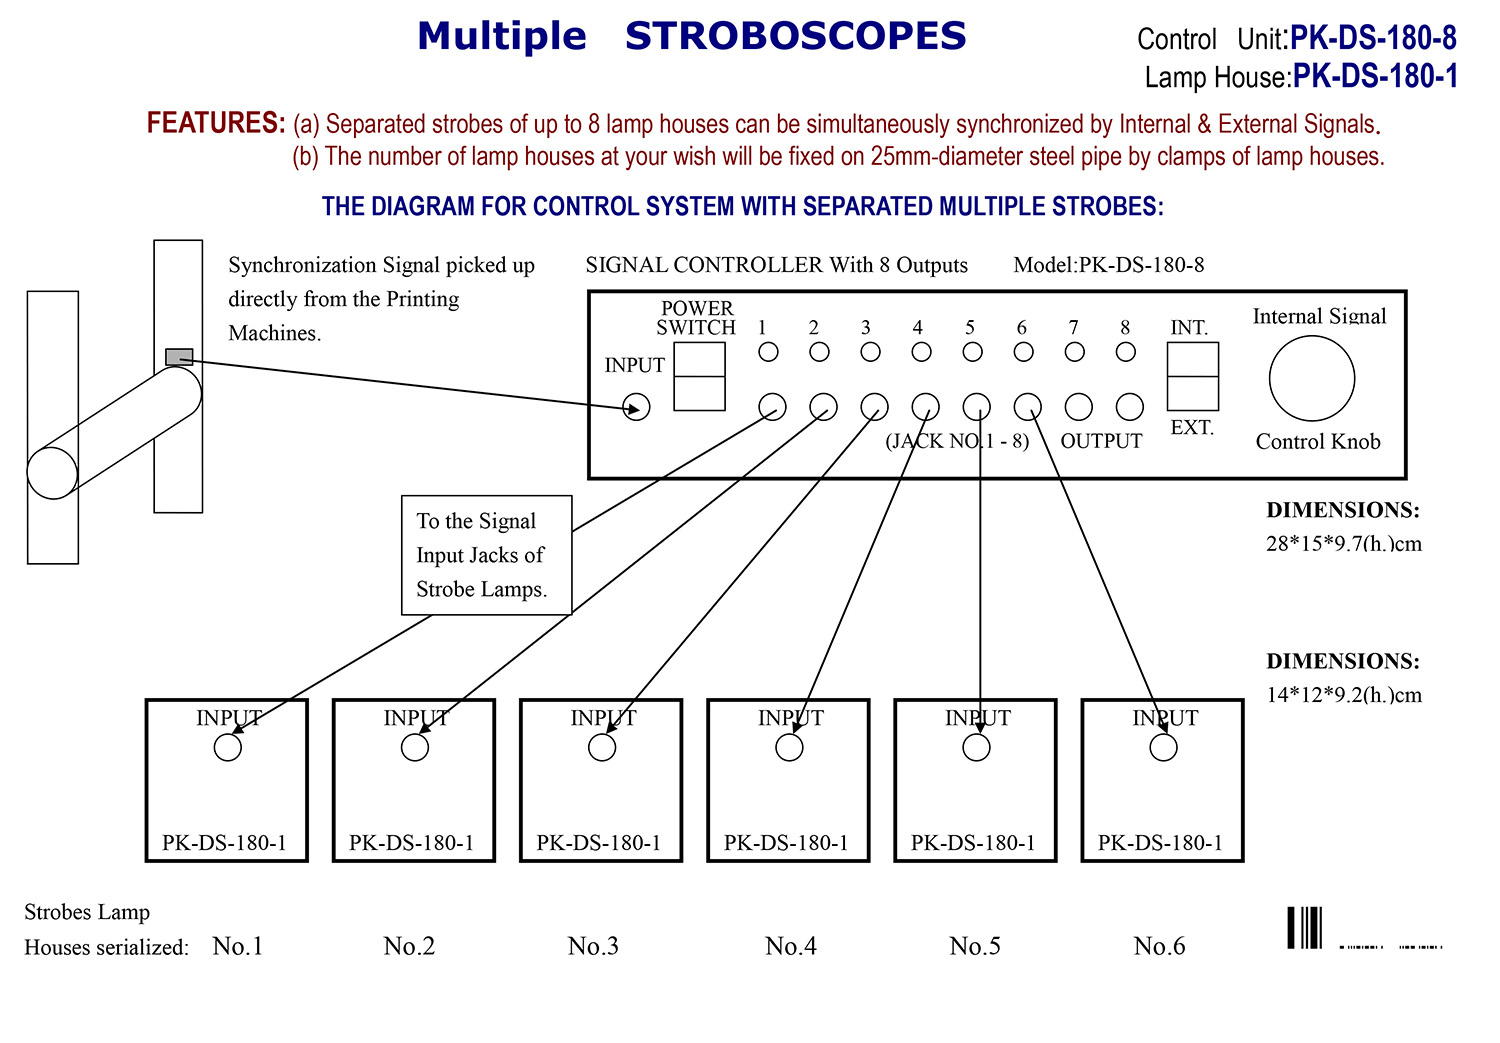 Multiple STROBOSCOPE PK-DS-180-8 / PK-DS-180-1